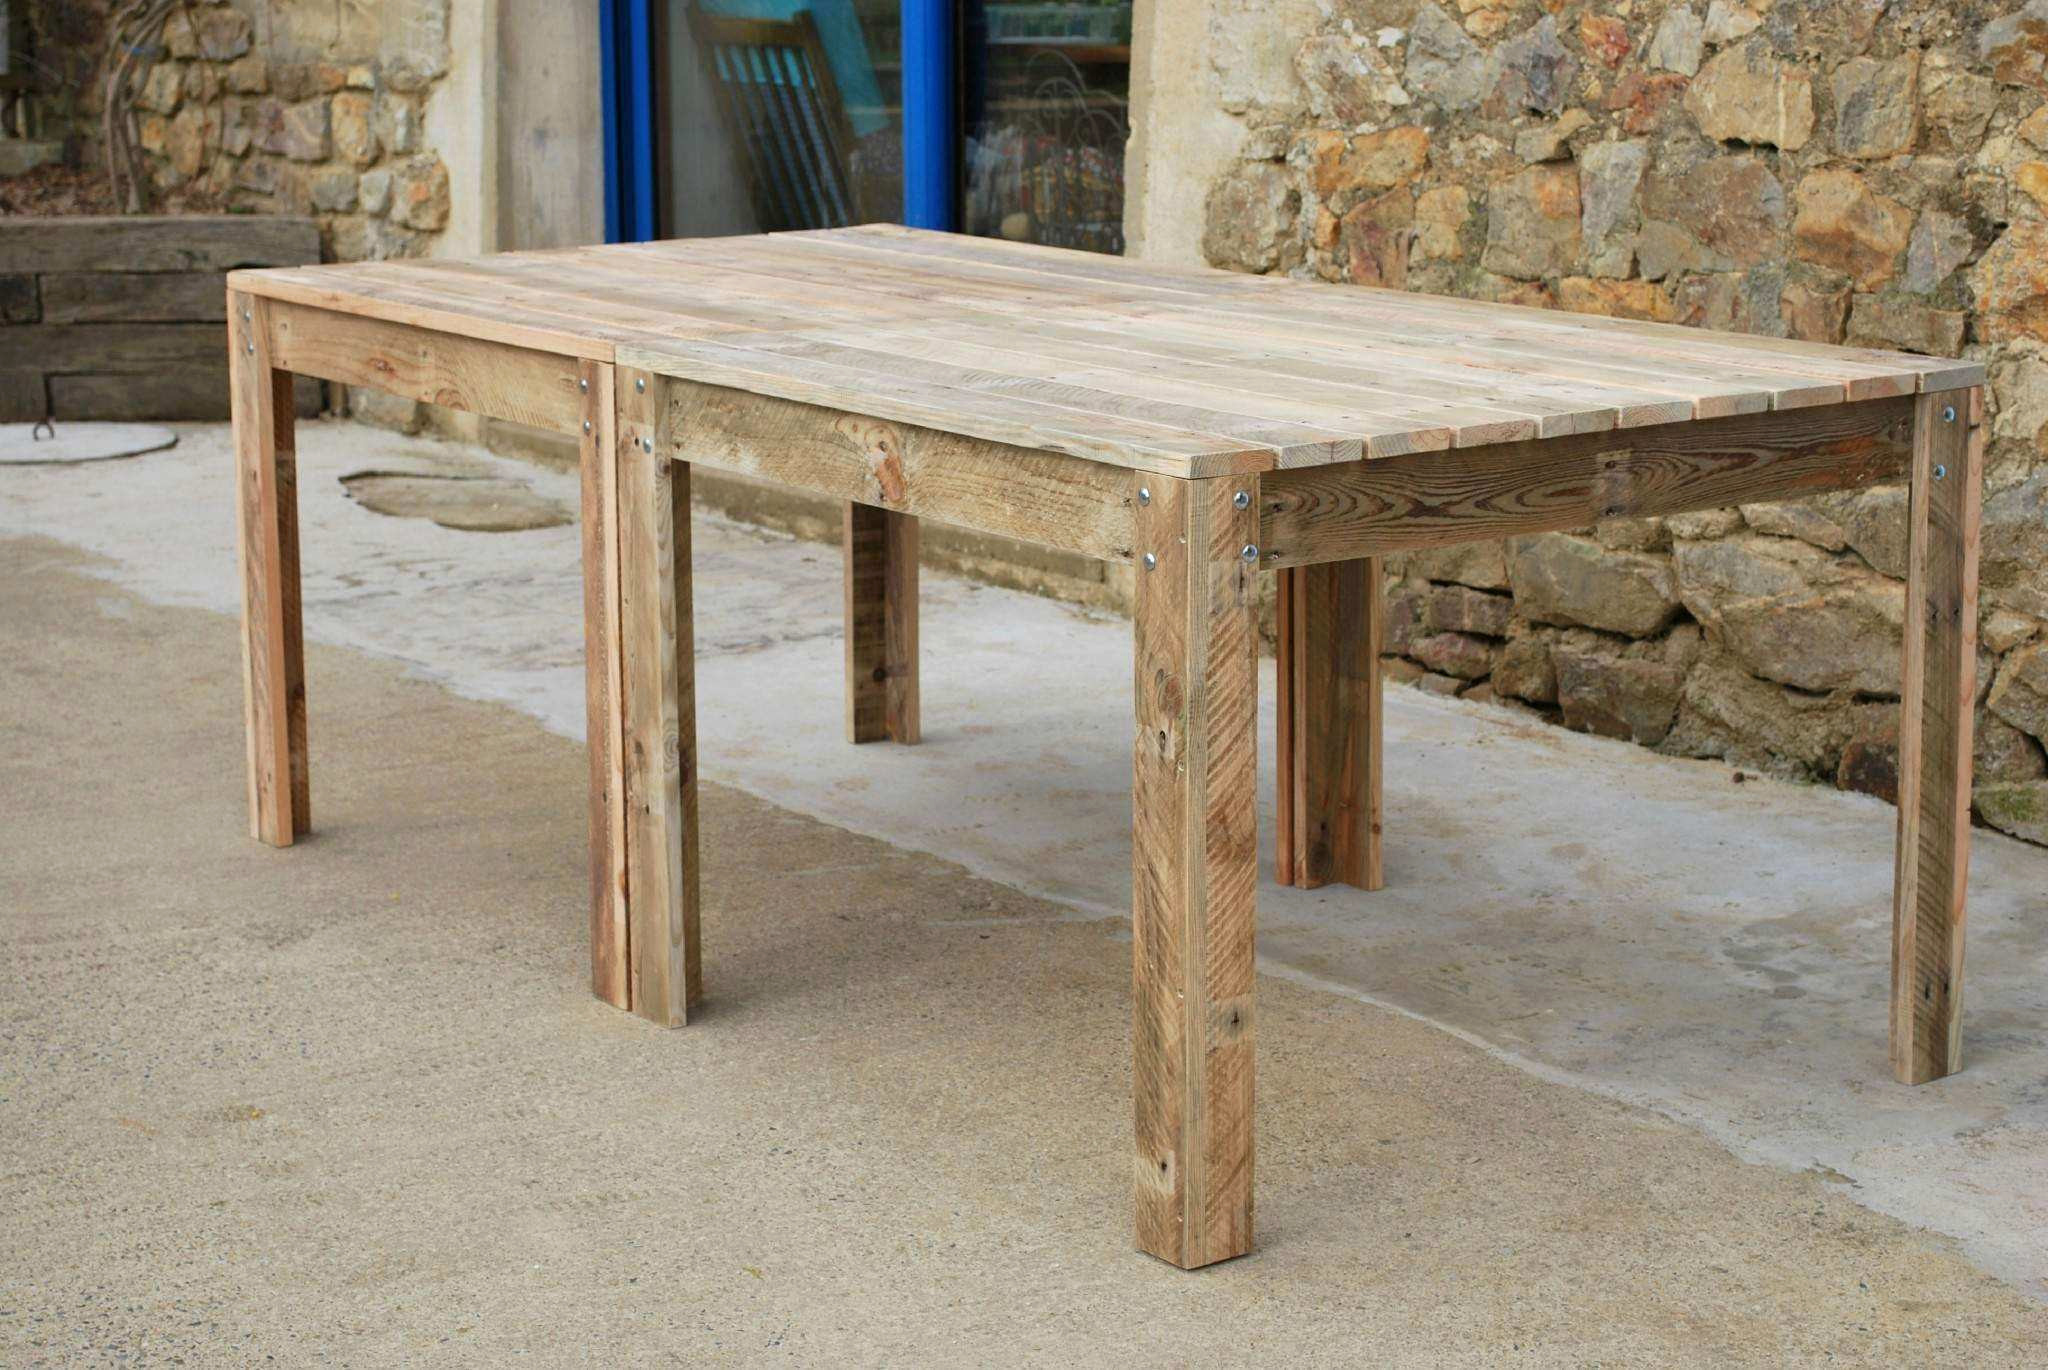 table en bois avec banc elegant igreentrip salon de jardin of table en bois avec banc